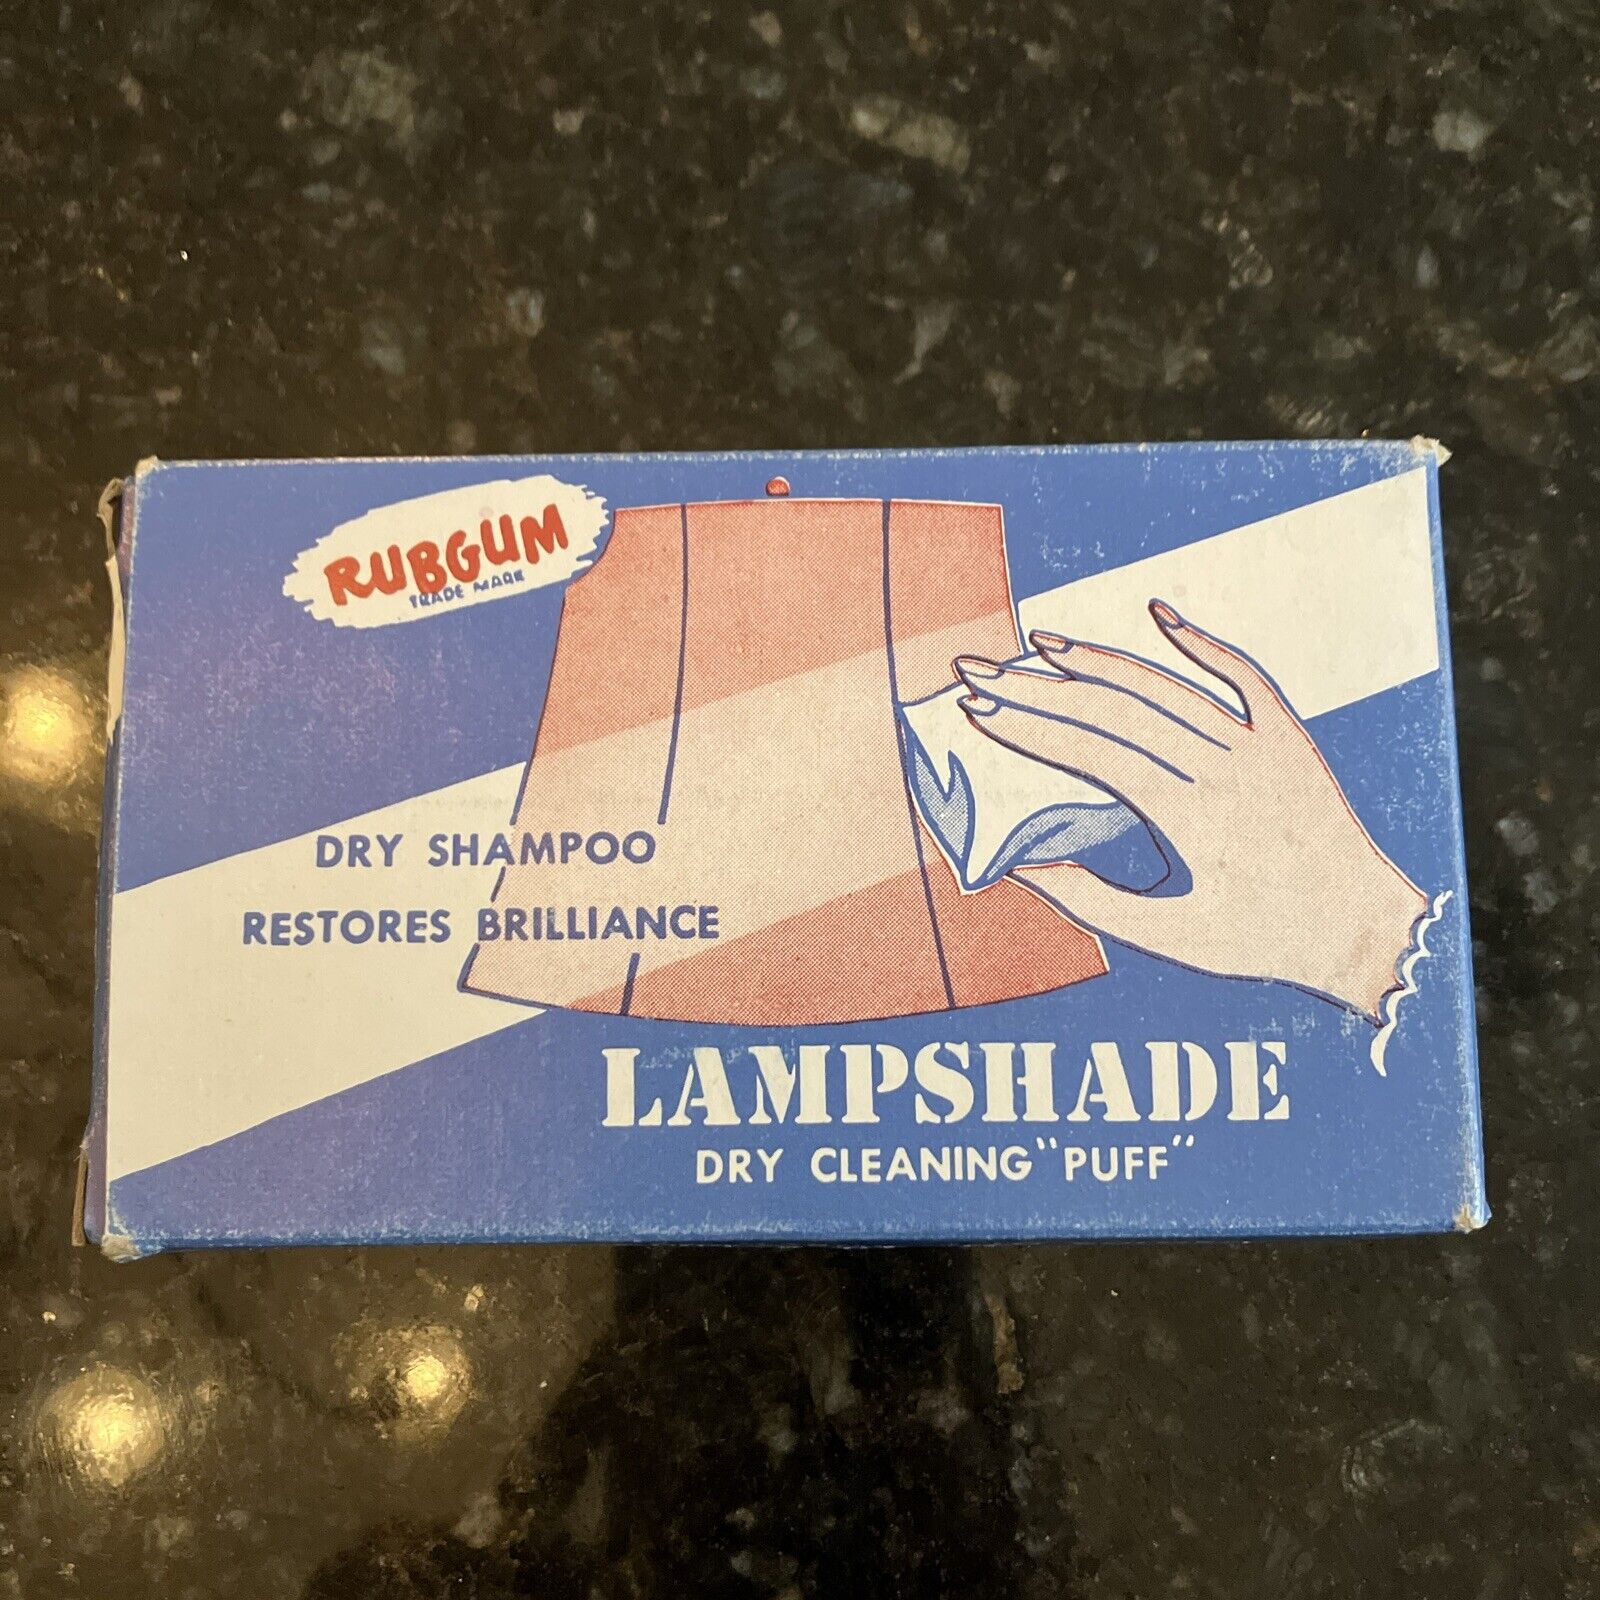 Vtg Advertising Box Rubgum Dry Shampoo Lamp Shade Cleaning Puff Made In USA